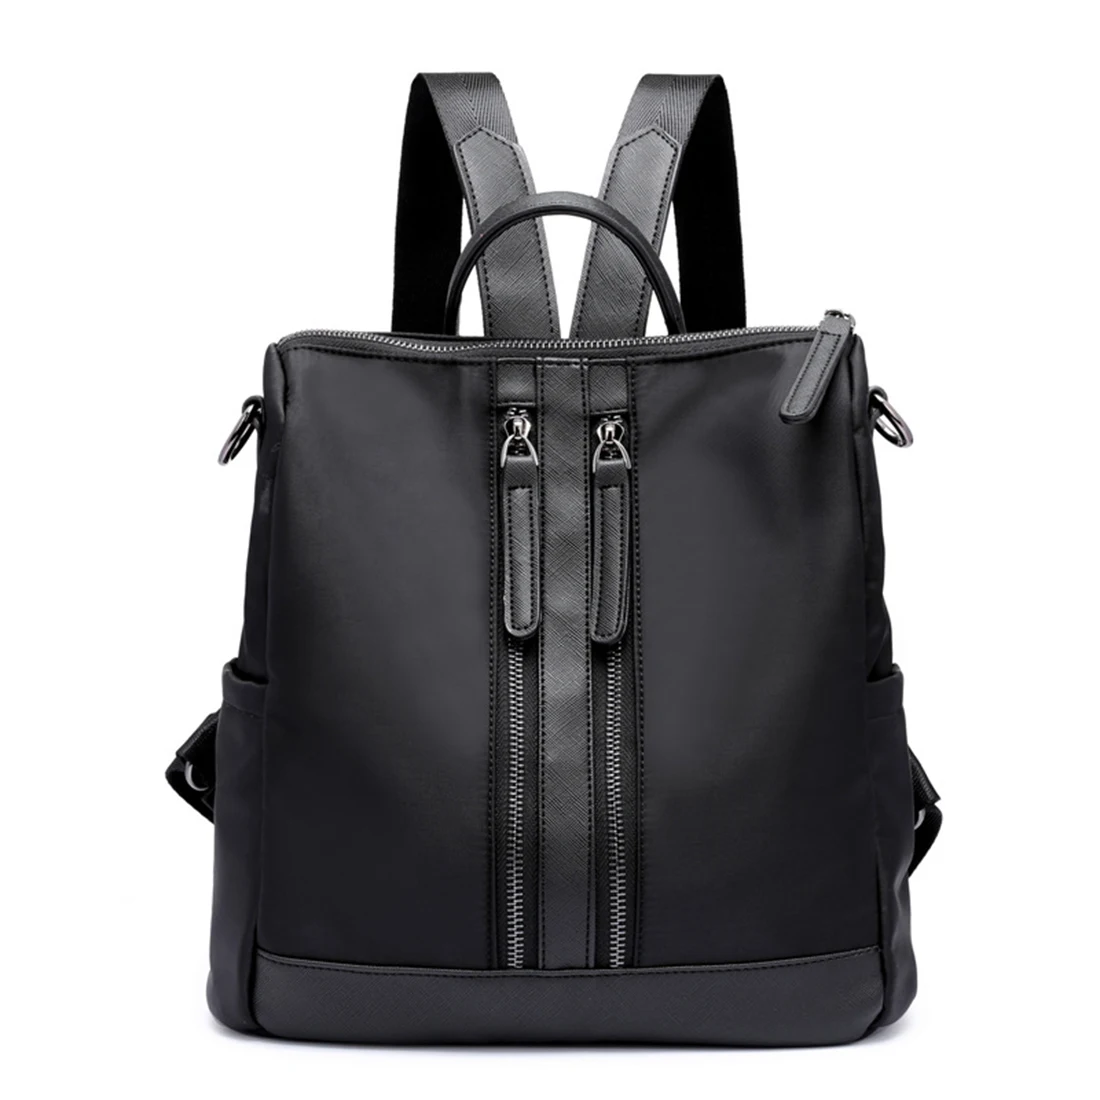 mediakits.theygsgroup.com : Buy Oxford Waterproof Women Fashion Dual Zipper Backpack Travel Large Bag Top ...